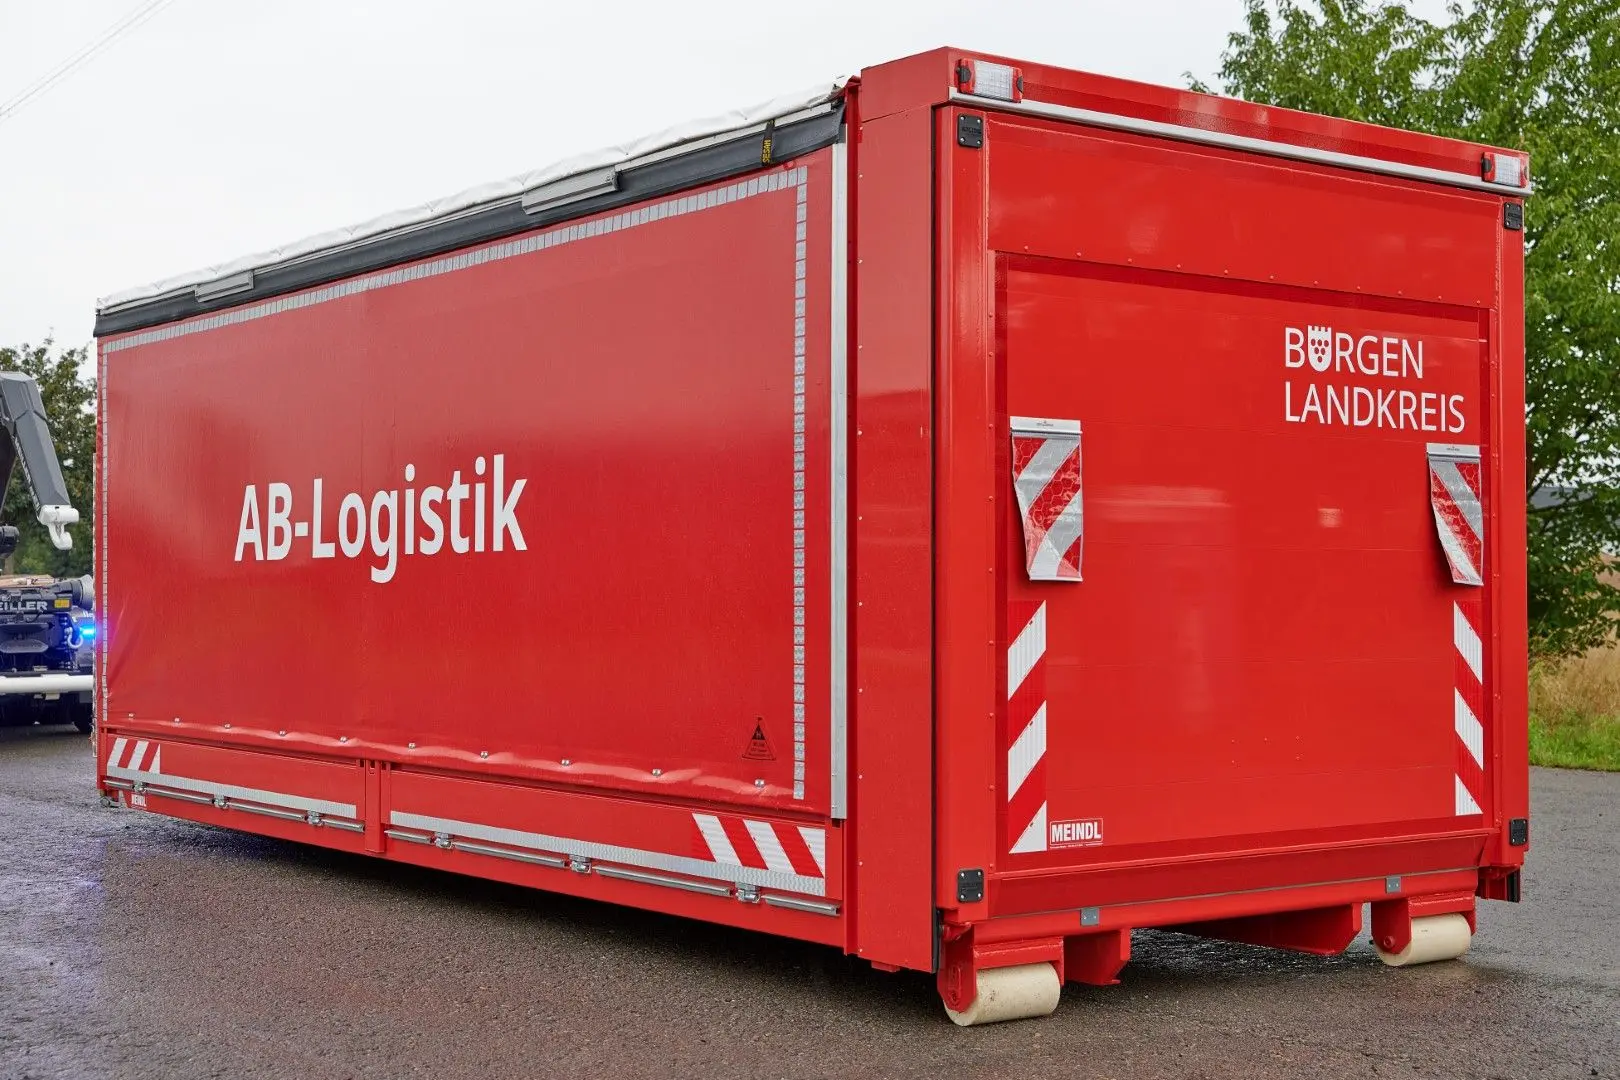 AB-Logistik Abrollbehälter Logistik FW Burgenlandkreis